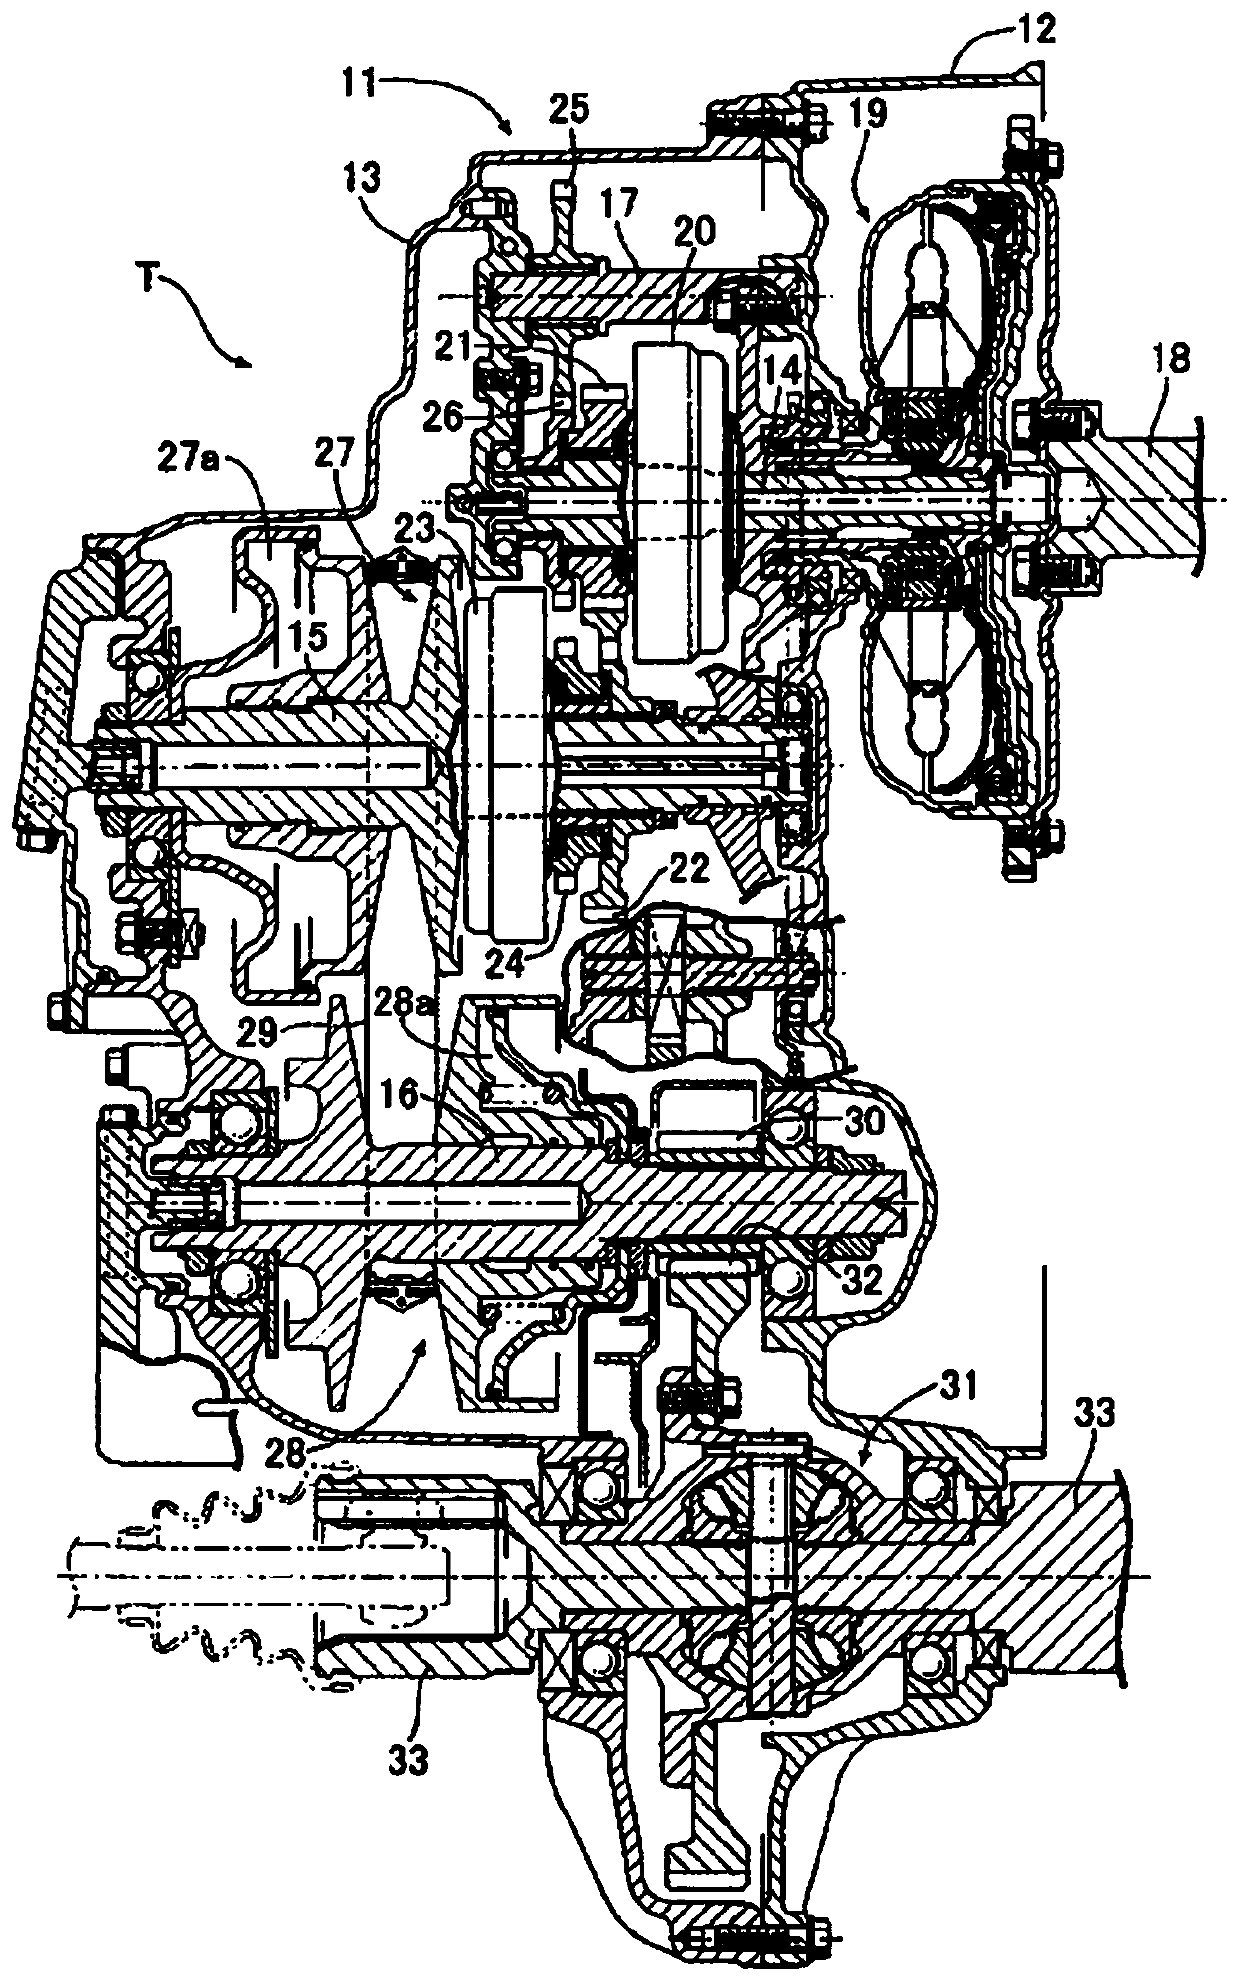 A hydraulic circuit of a transmission